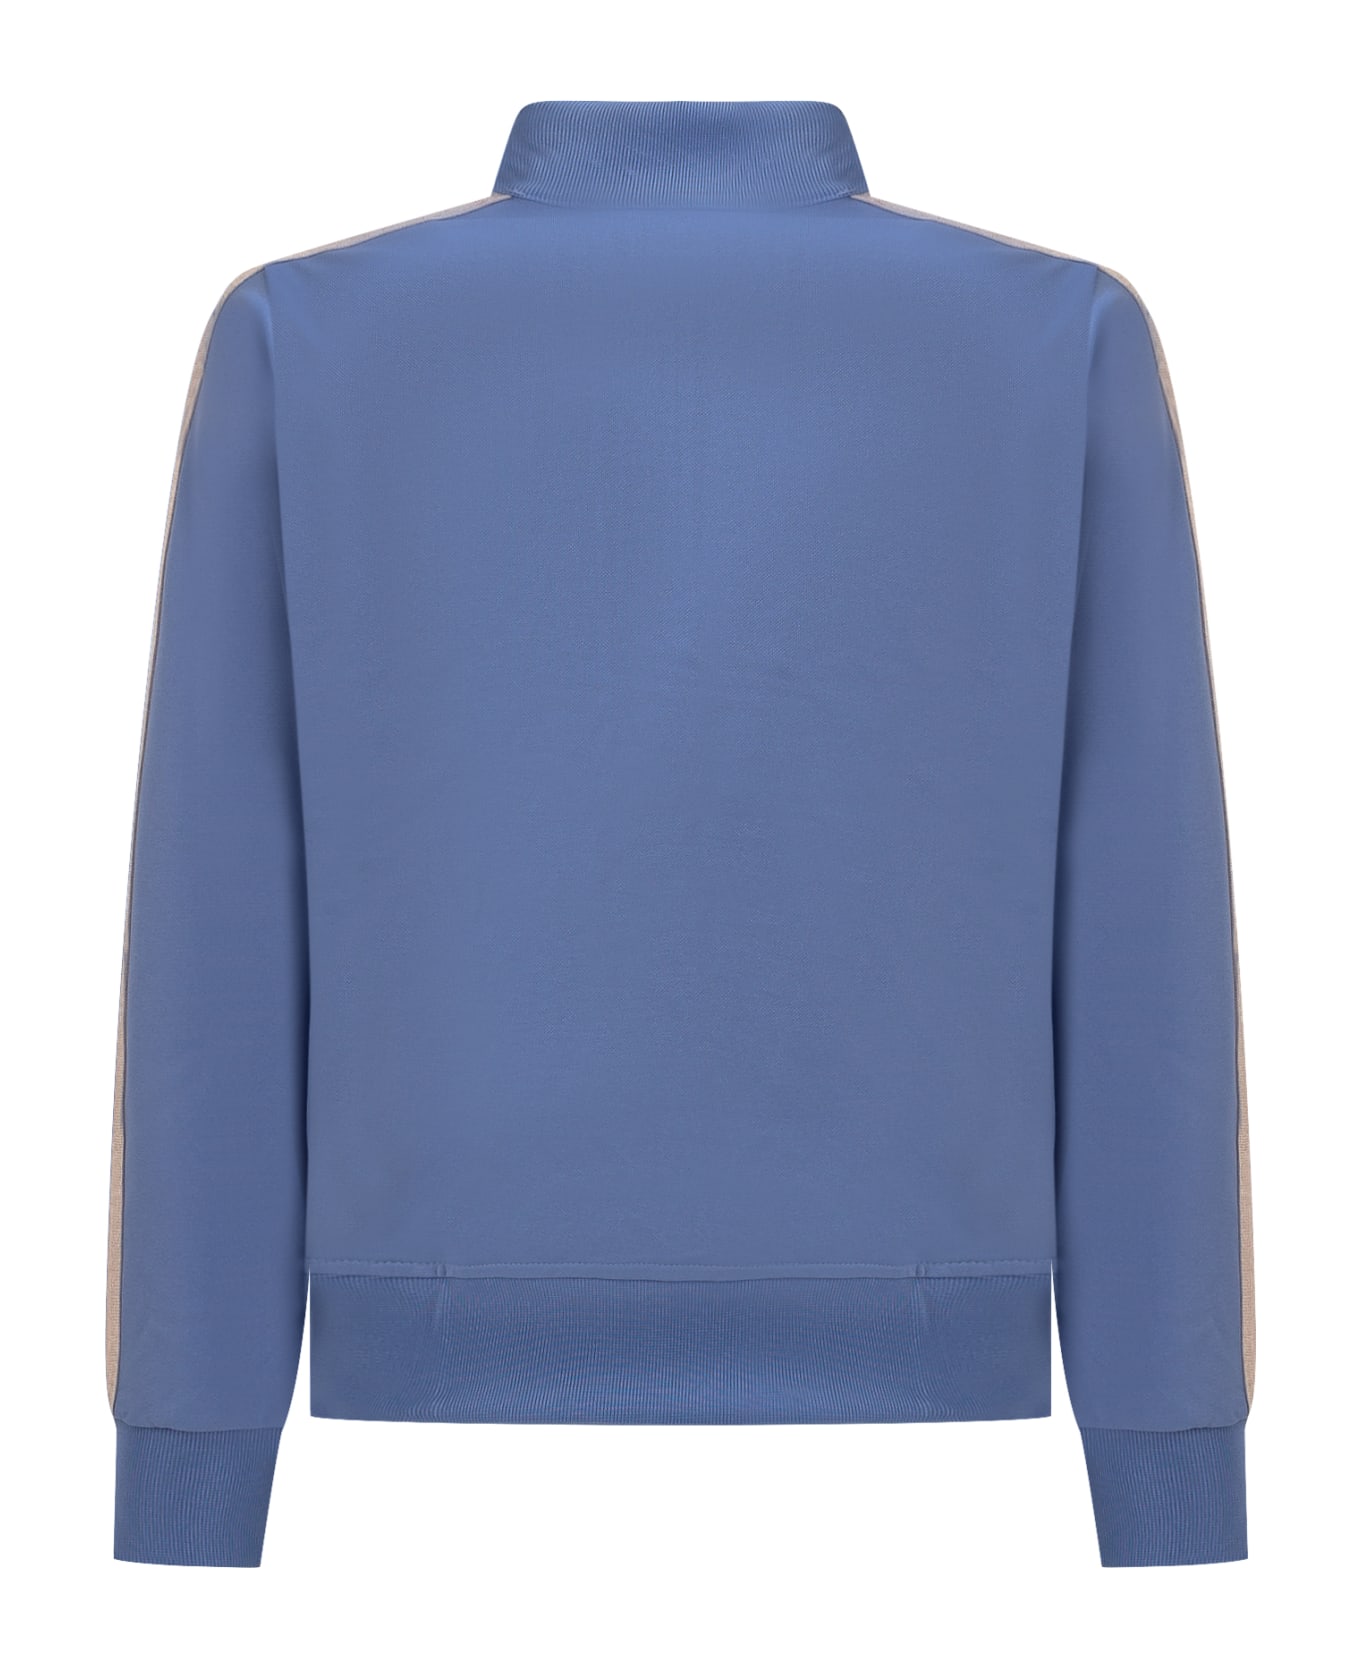 Palm Angels Logo Sweatshirt - LIGHT BLUE OFF WHITE ニットウェア＆スウェットシャツ